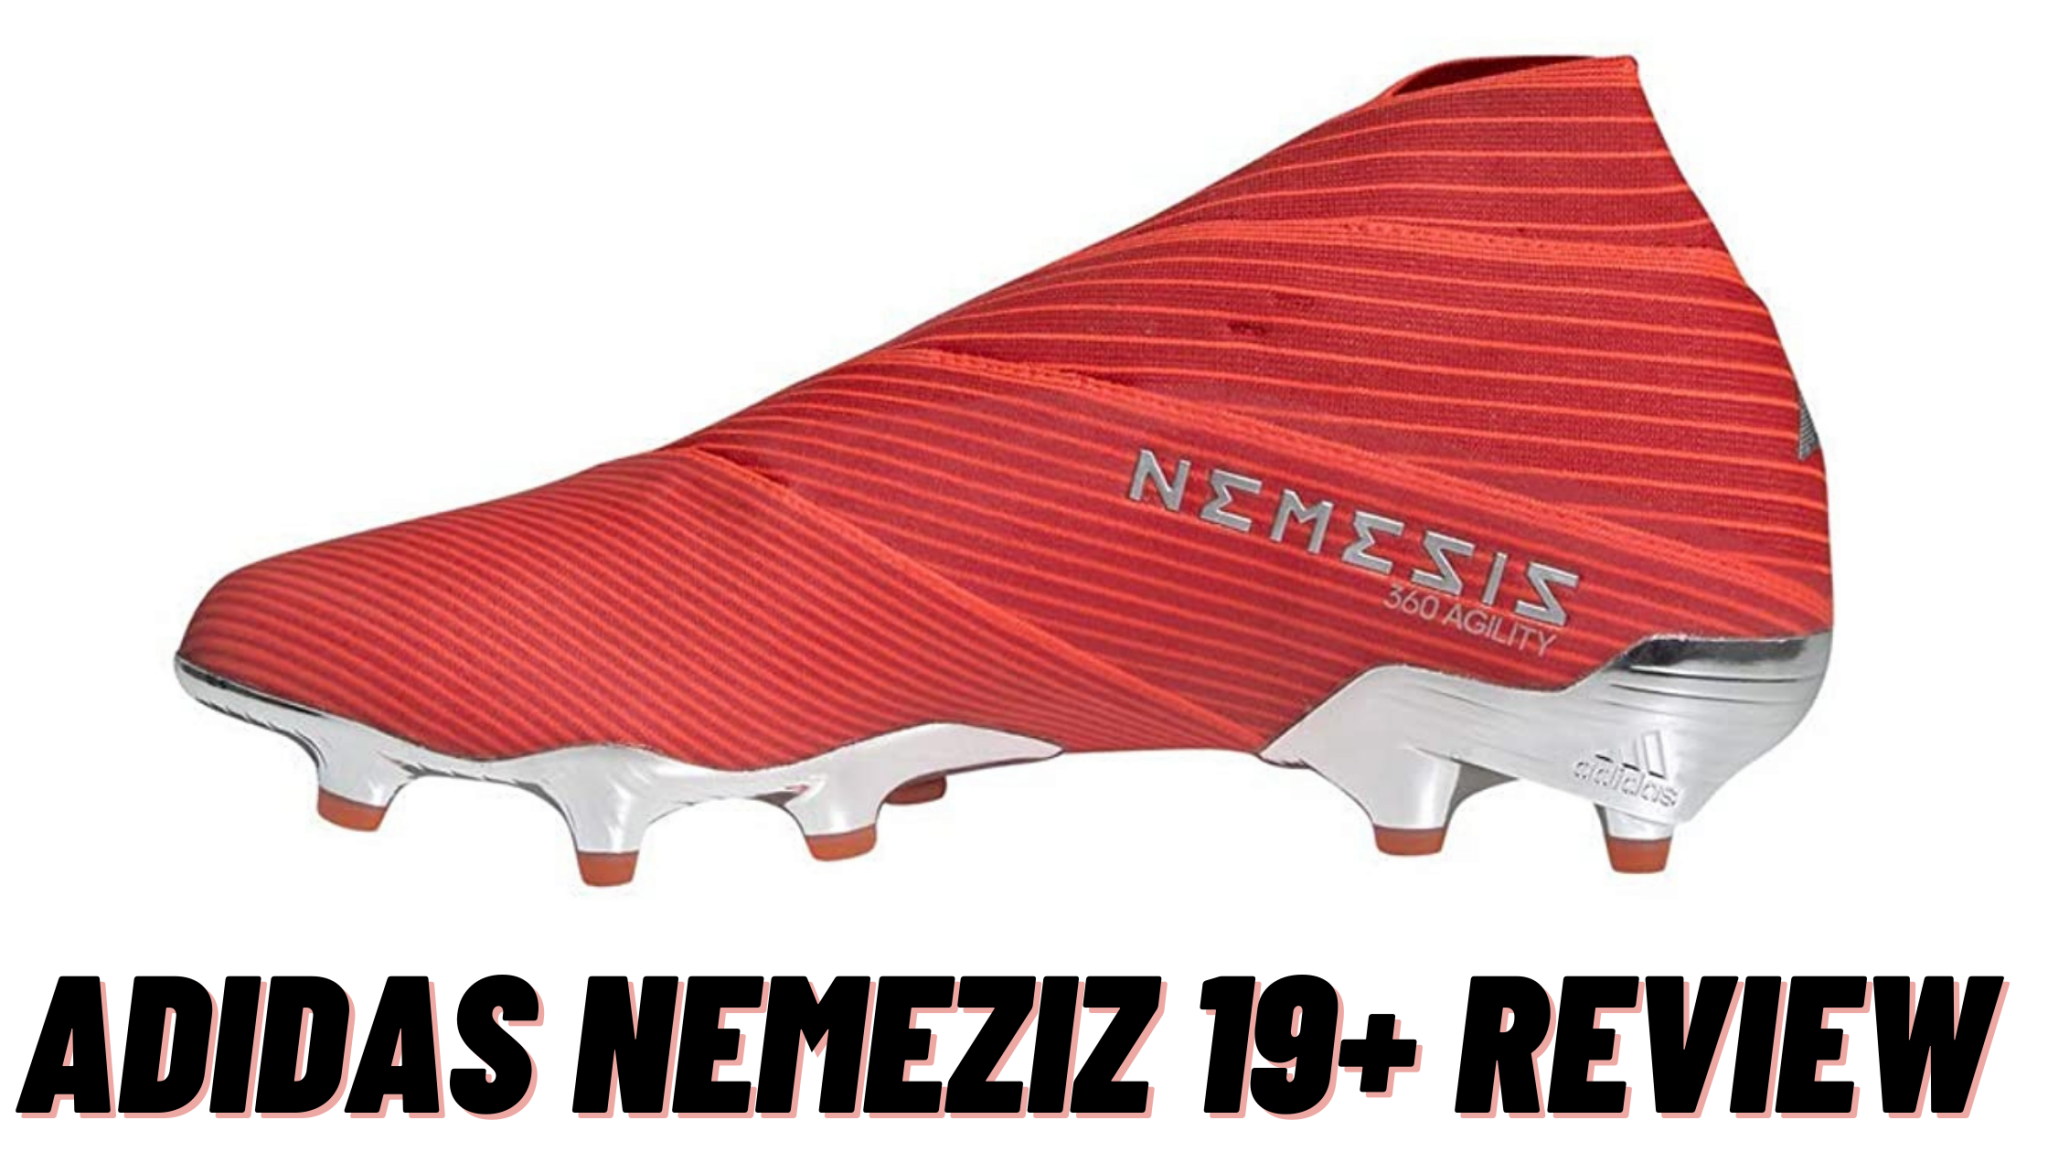 Adidas Nemeziz 19+ review